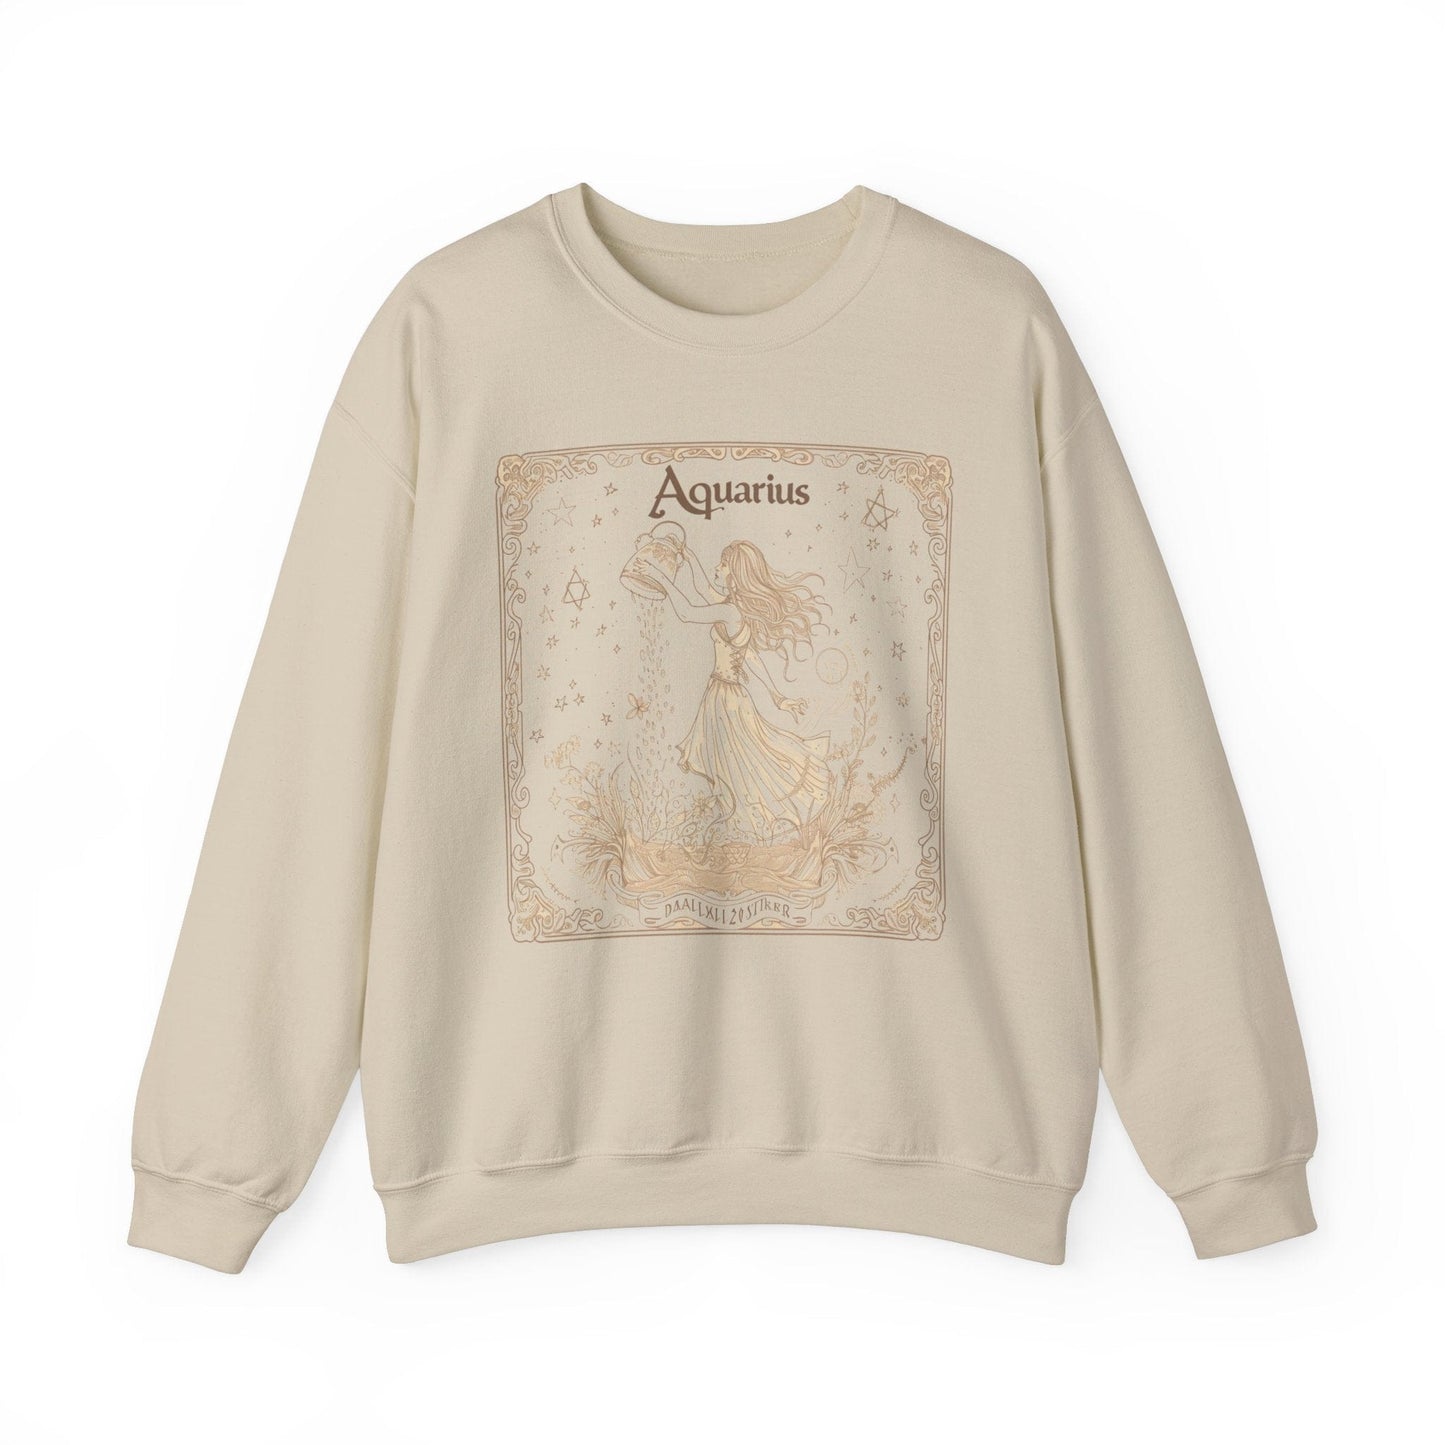 Sweatshirt S / Sand Aquarius Sepia Dream Sweatshirt: Ethereal Elegance for the Water Bearer